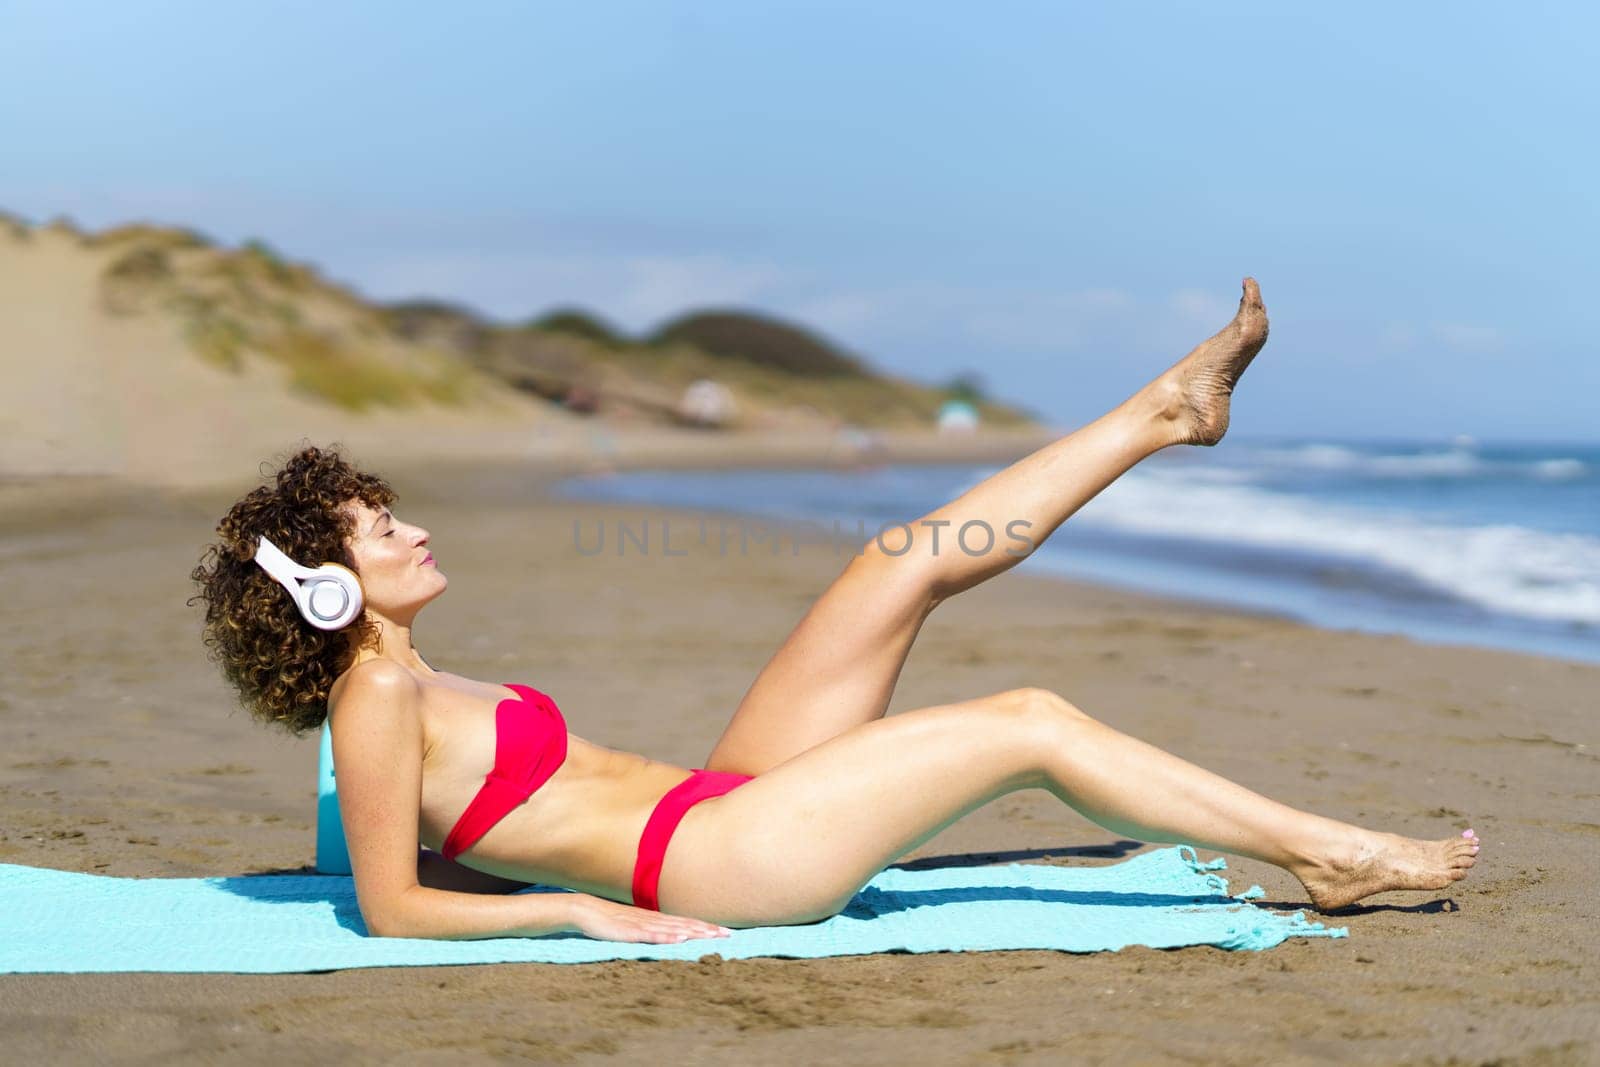 Full body side view of young slim female in pink bikini and headphones raising leg while lying on sandy beach under sunshine